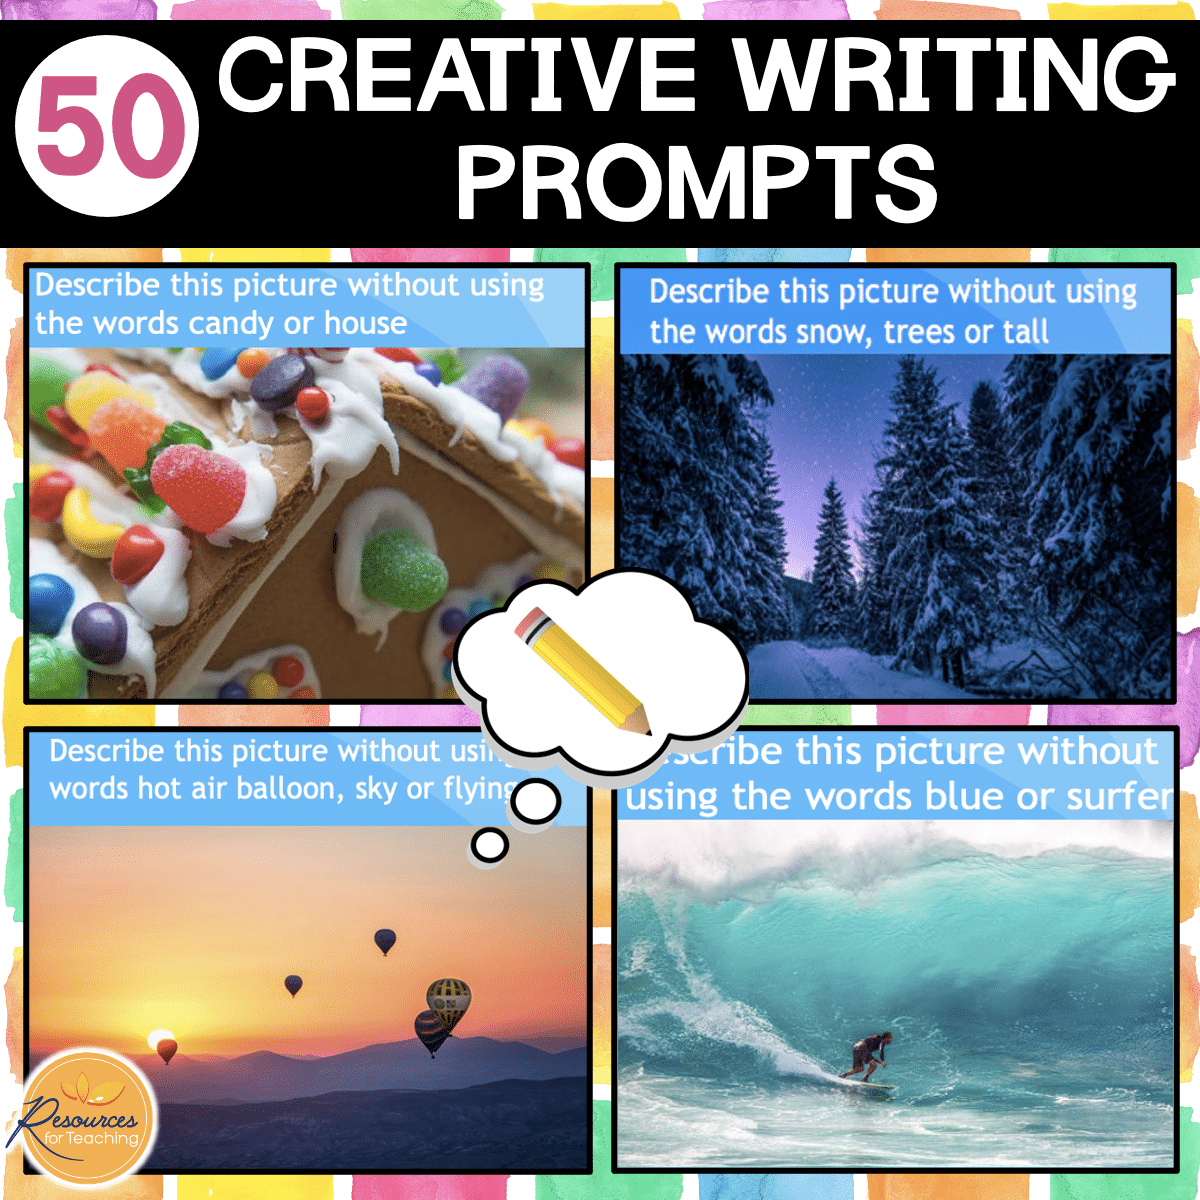 setting creative writing prompts